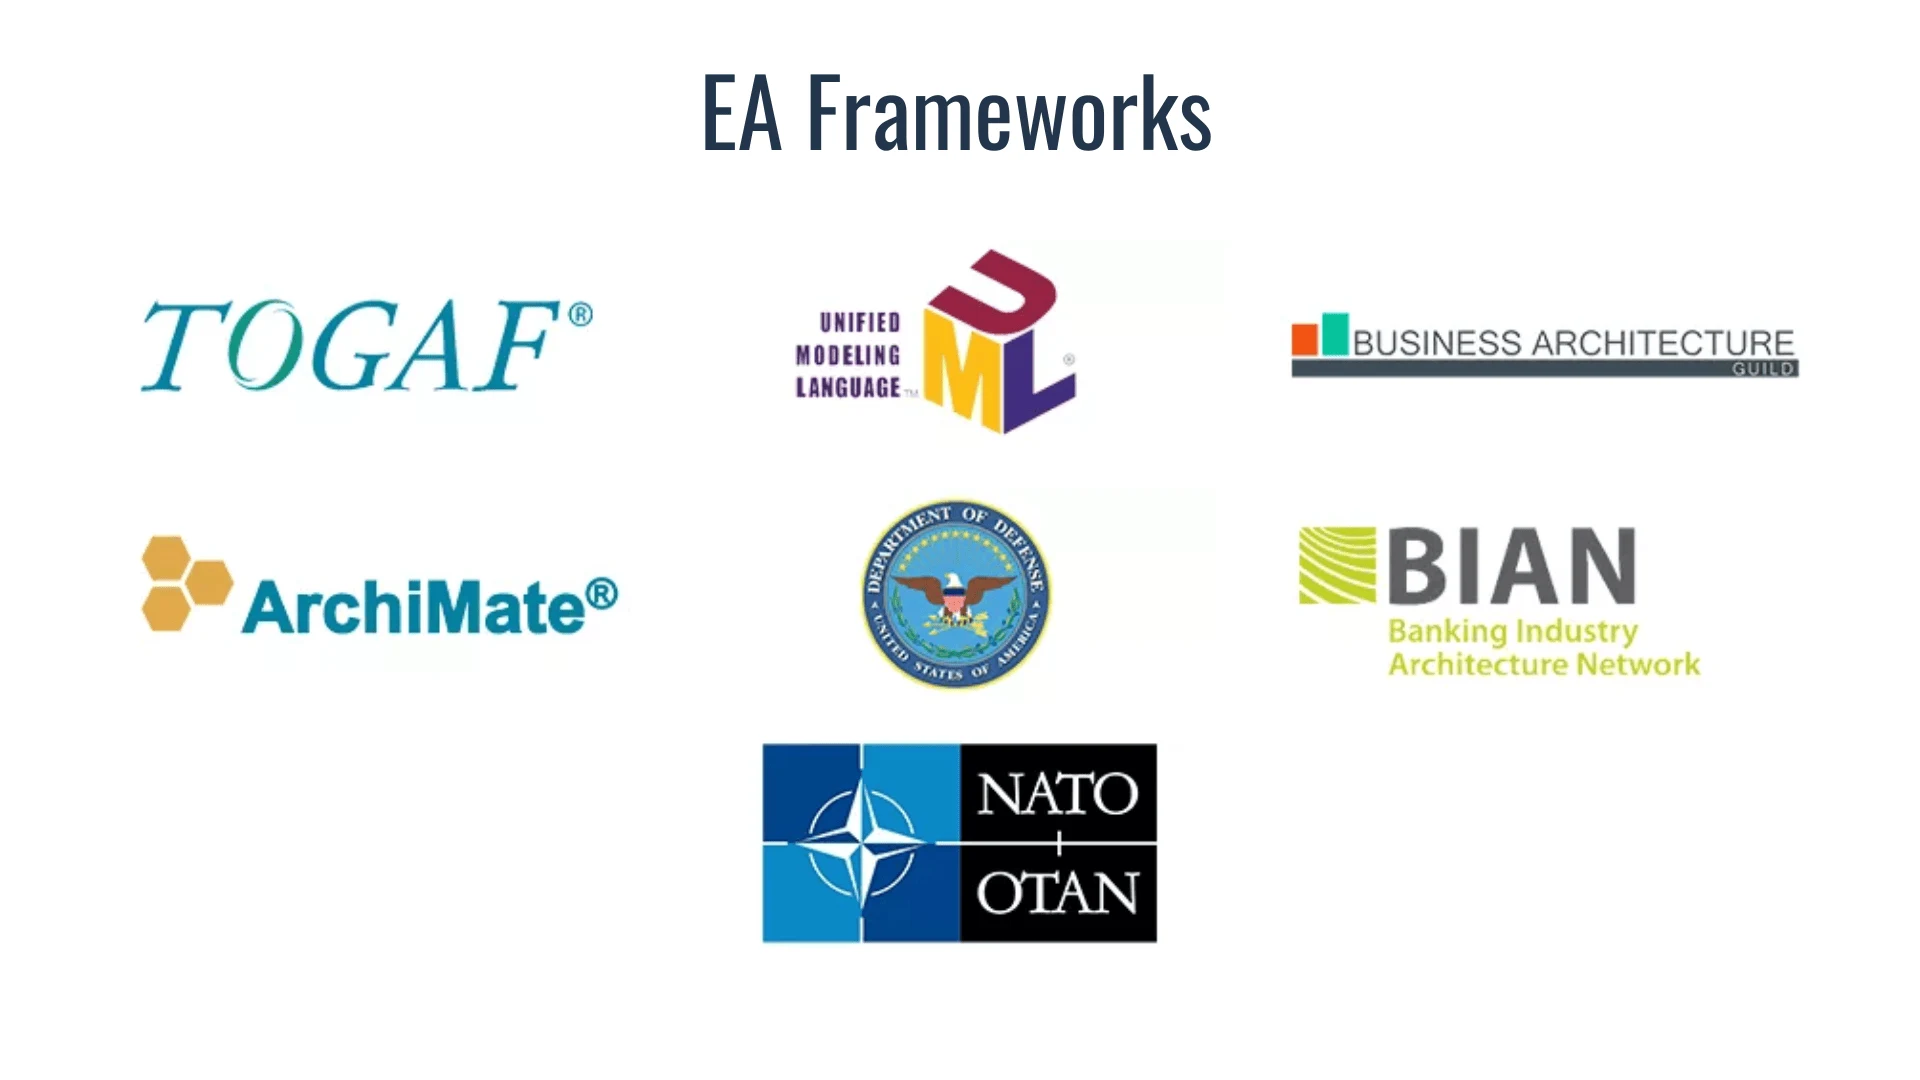 Enterprise Architecture frameworks